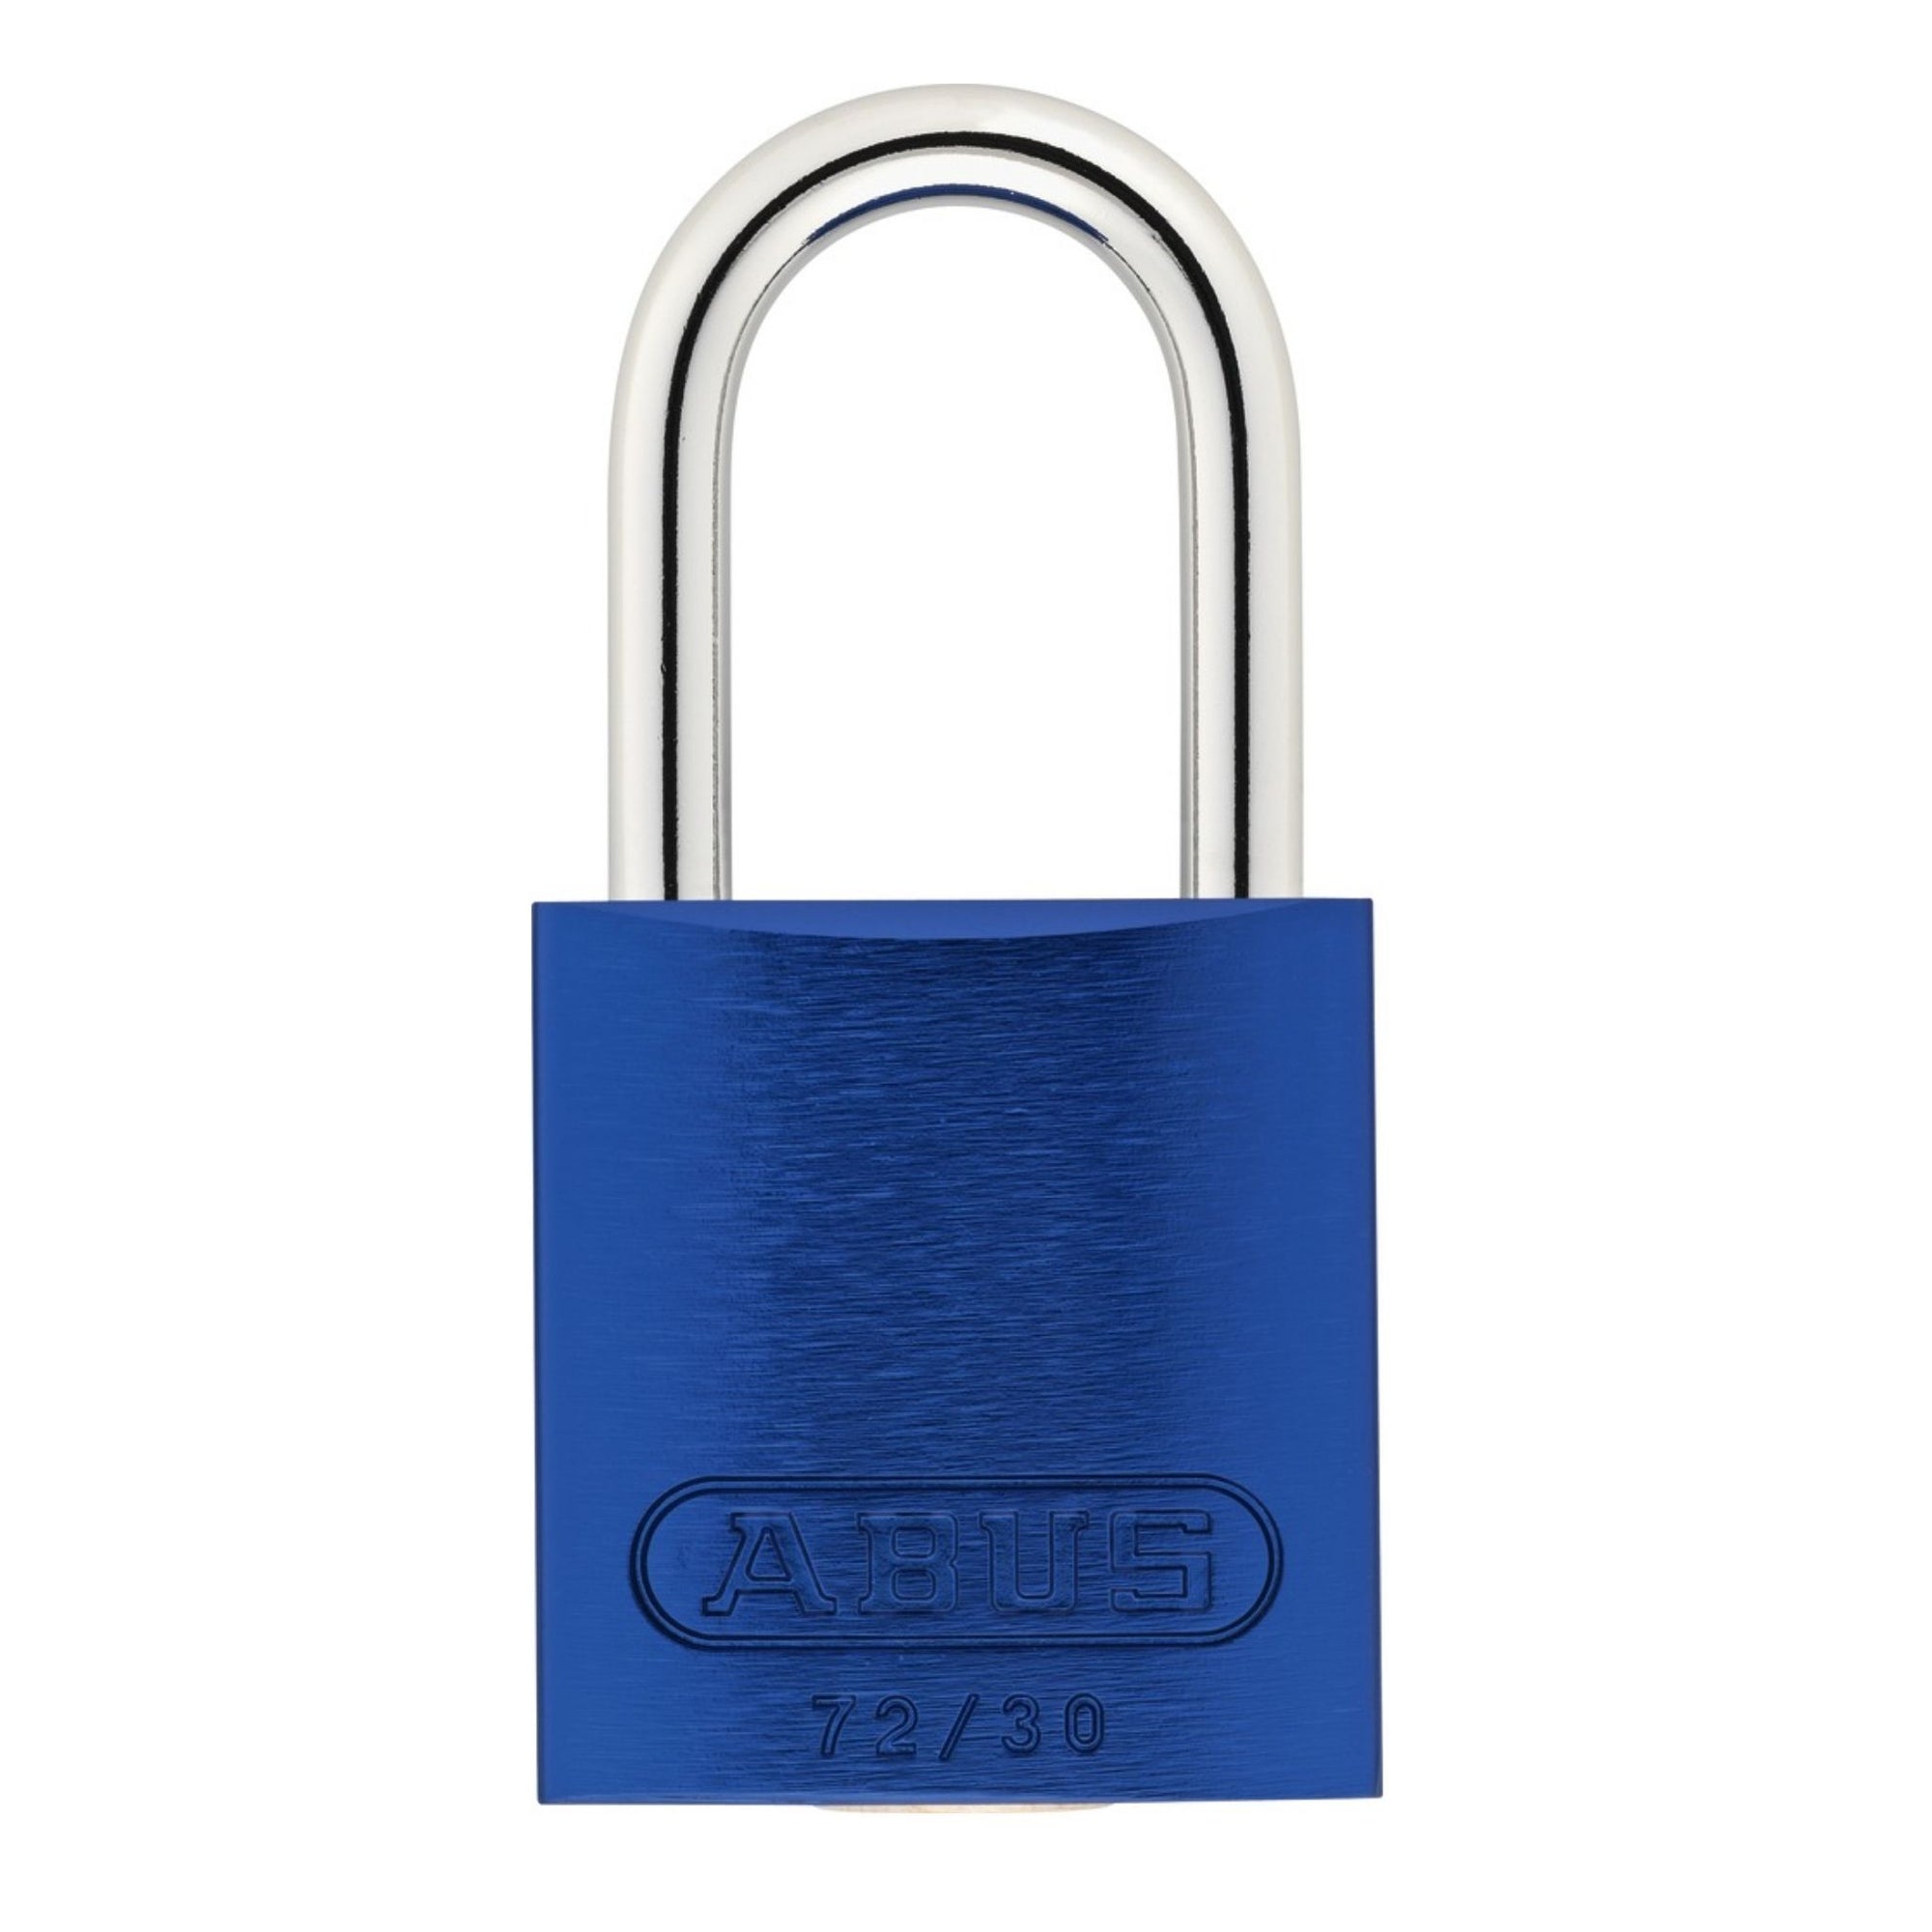 Abus 72/30 KA Blue Aluminum Safety Padlock Keyed Alike Lockout Tagout Locks - The Lock Source